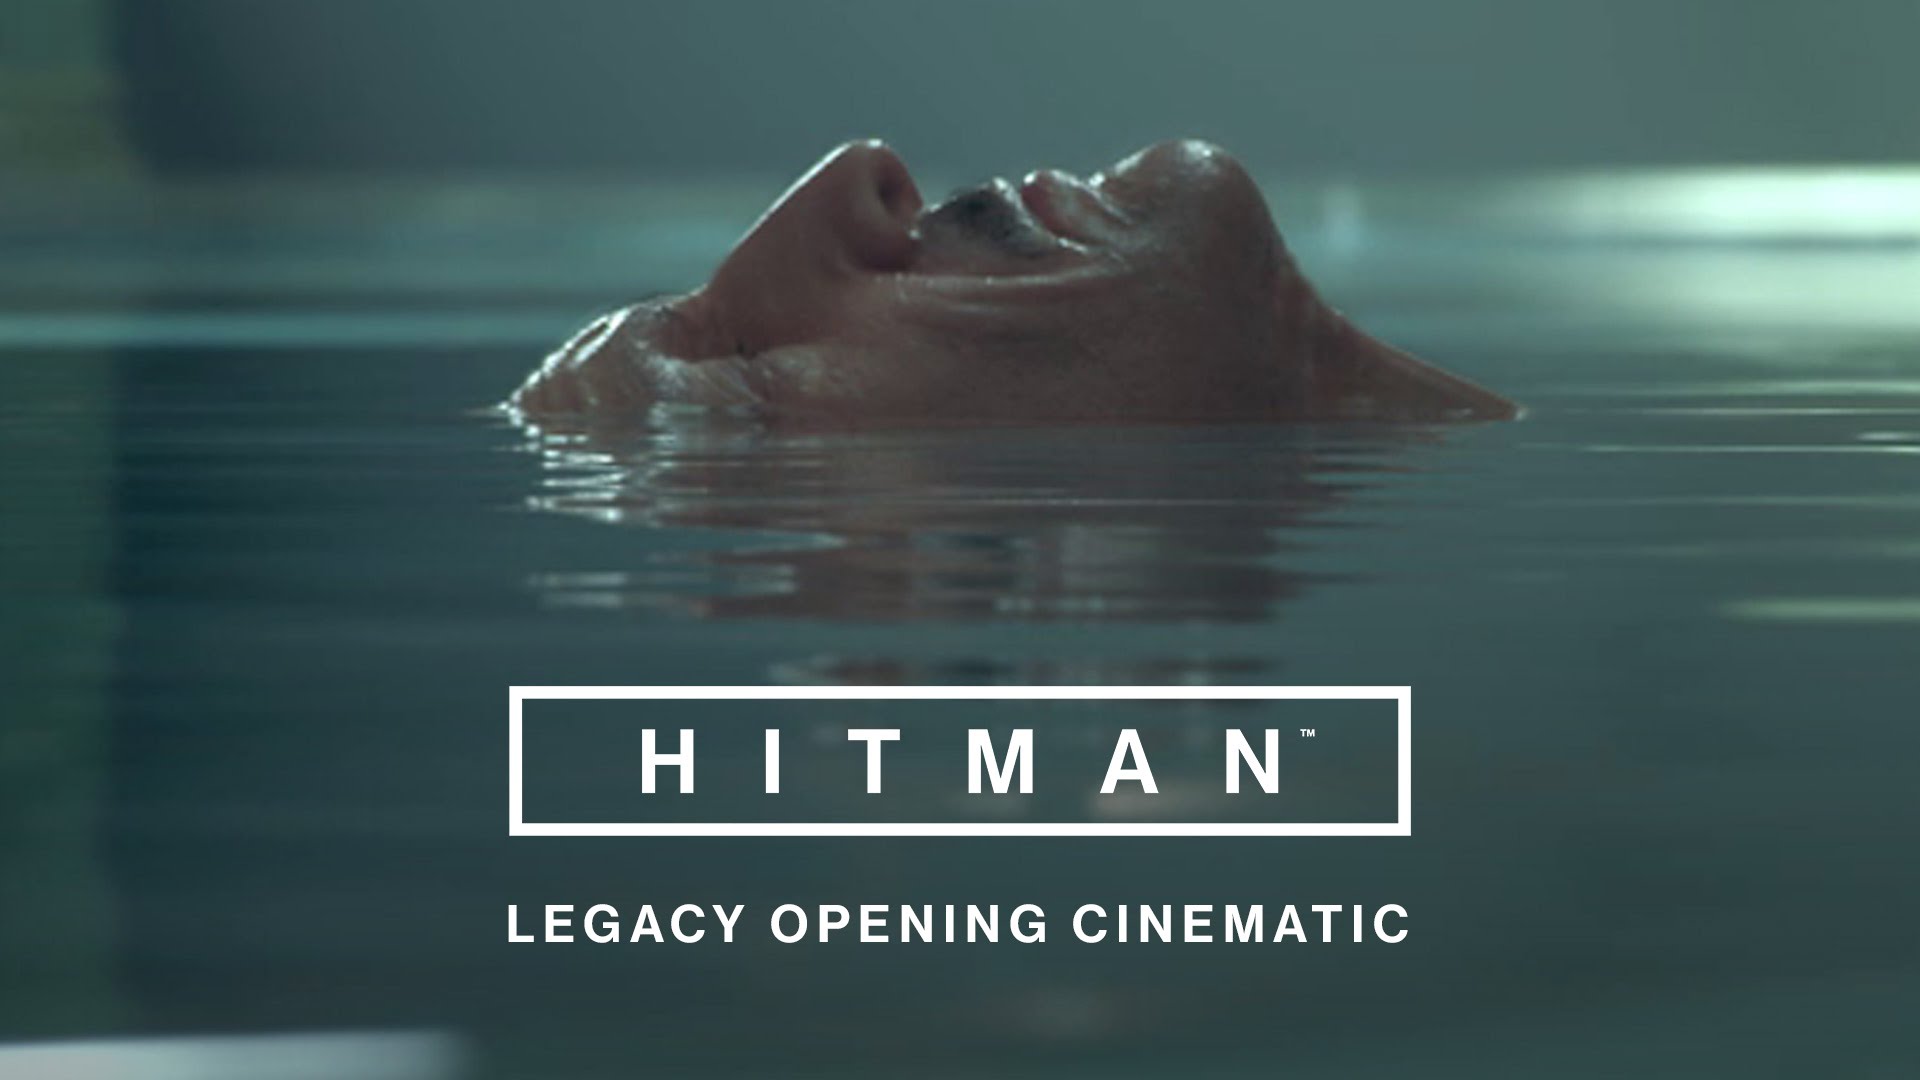 HITMAN - 'Legacy' Opening Cinematic